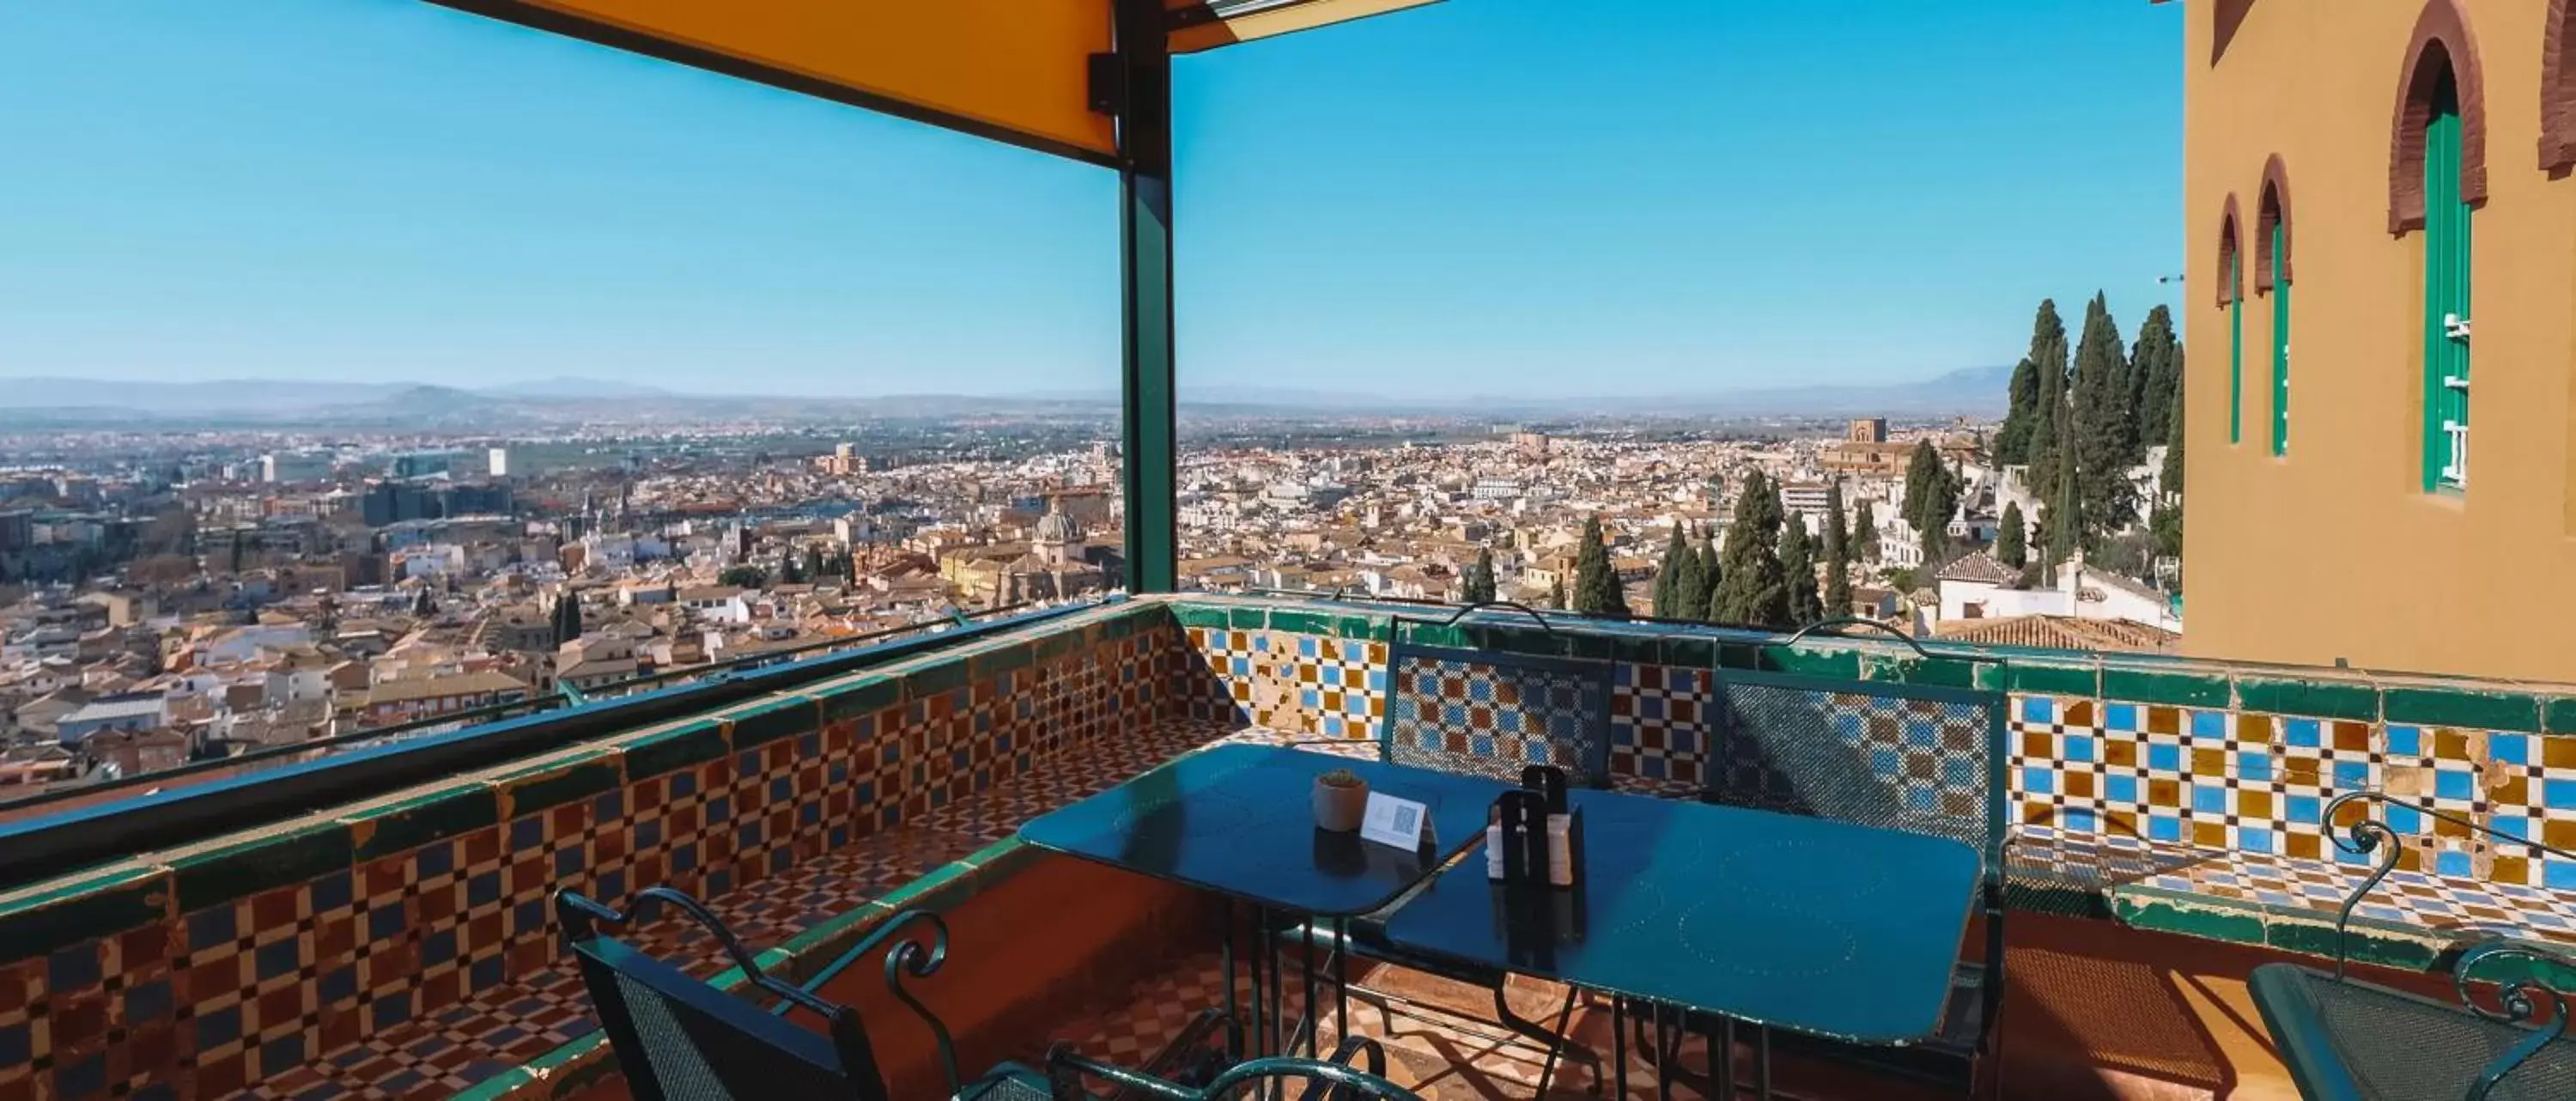 Balcony/Terrace in Alhambra Palace Hotel